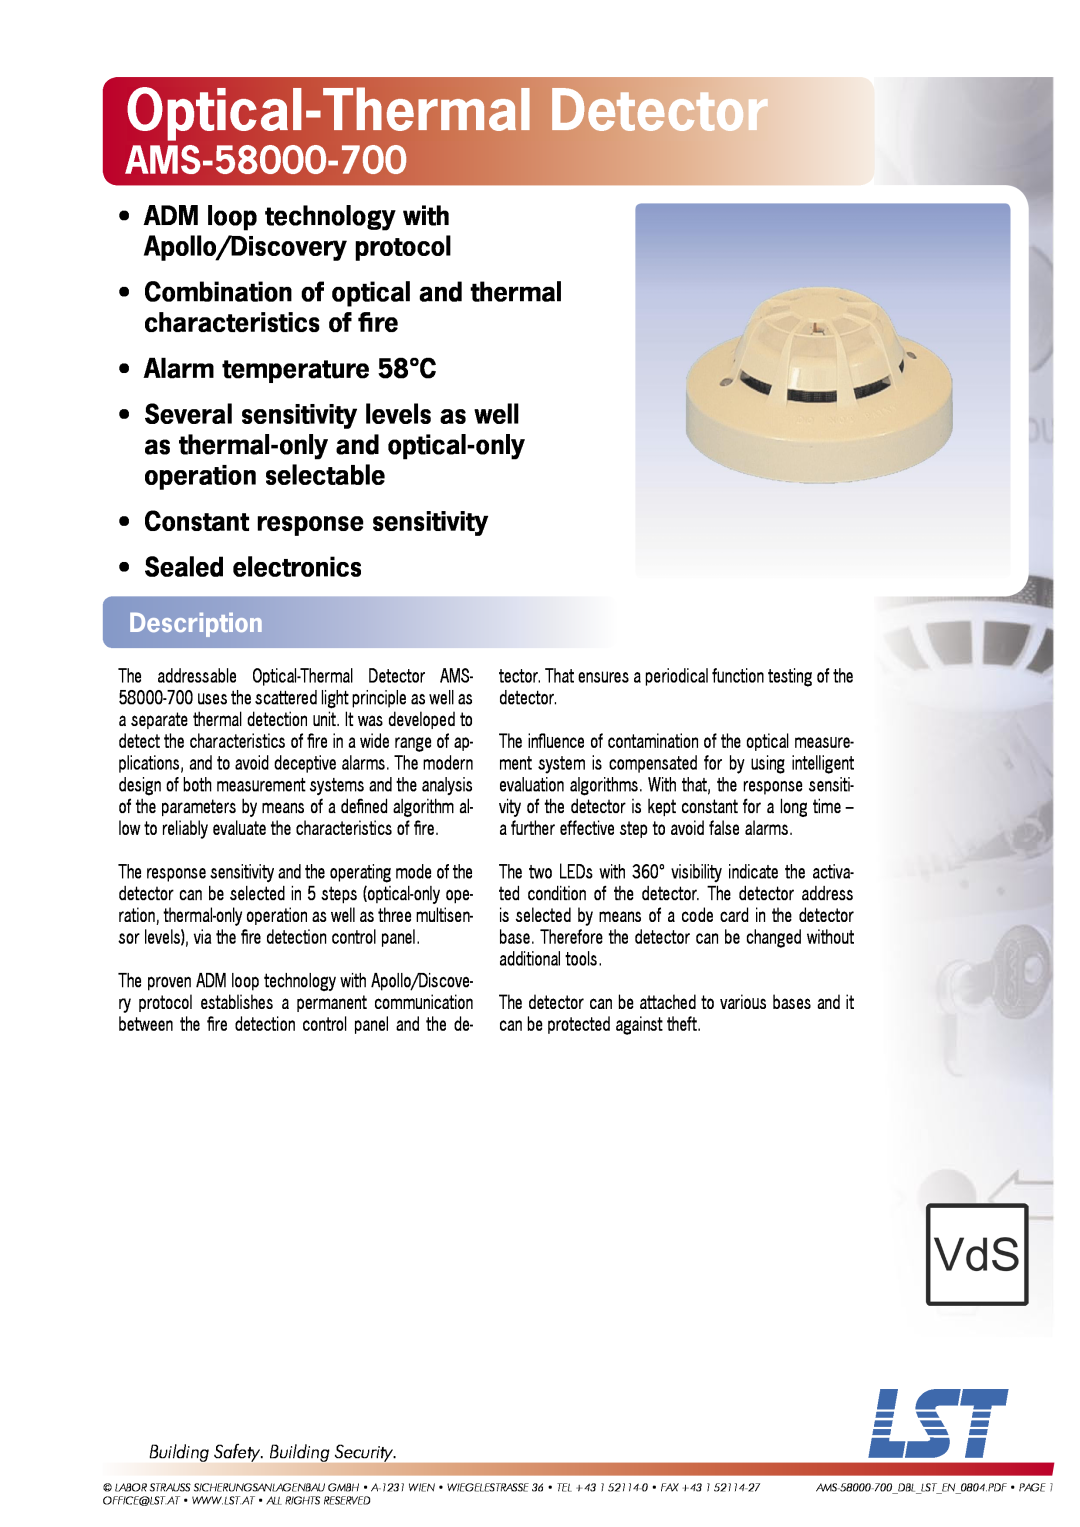 LST AMS-58000-700 manual Description, Optical-ThermalDetector, Alarm temperature 58C, Constant response sensitivity 